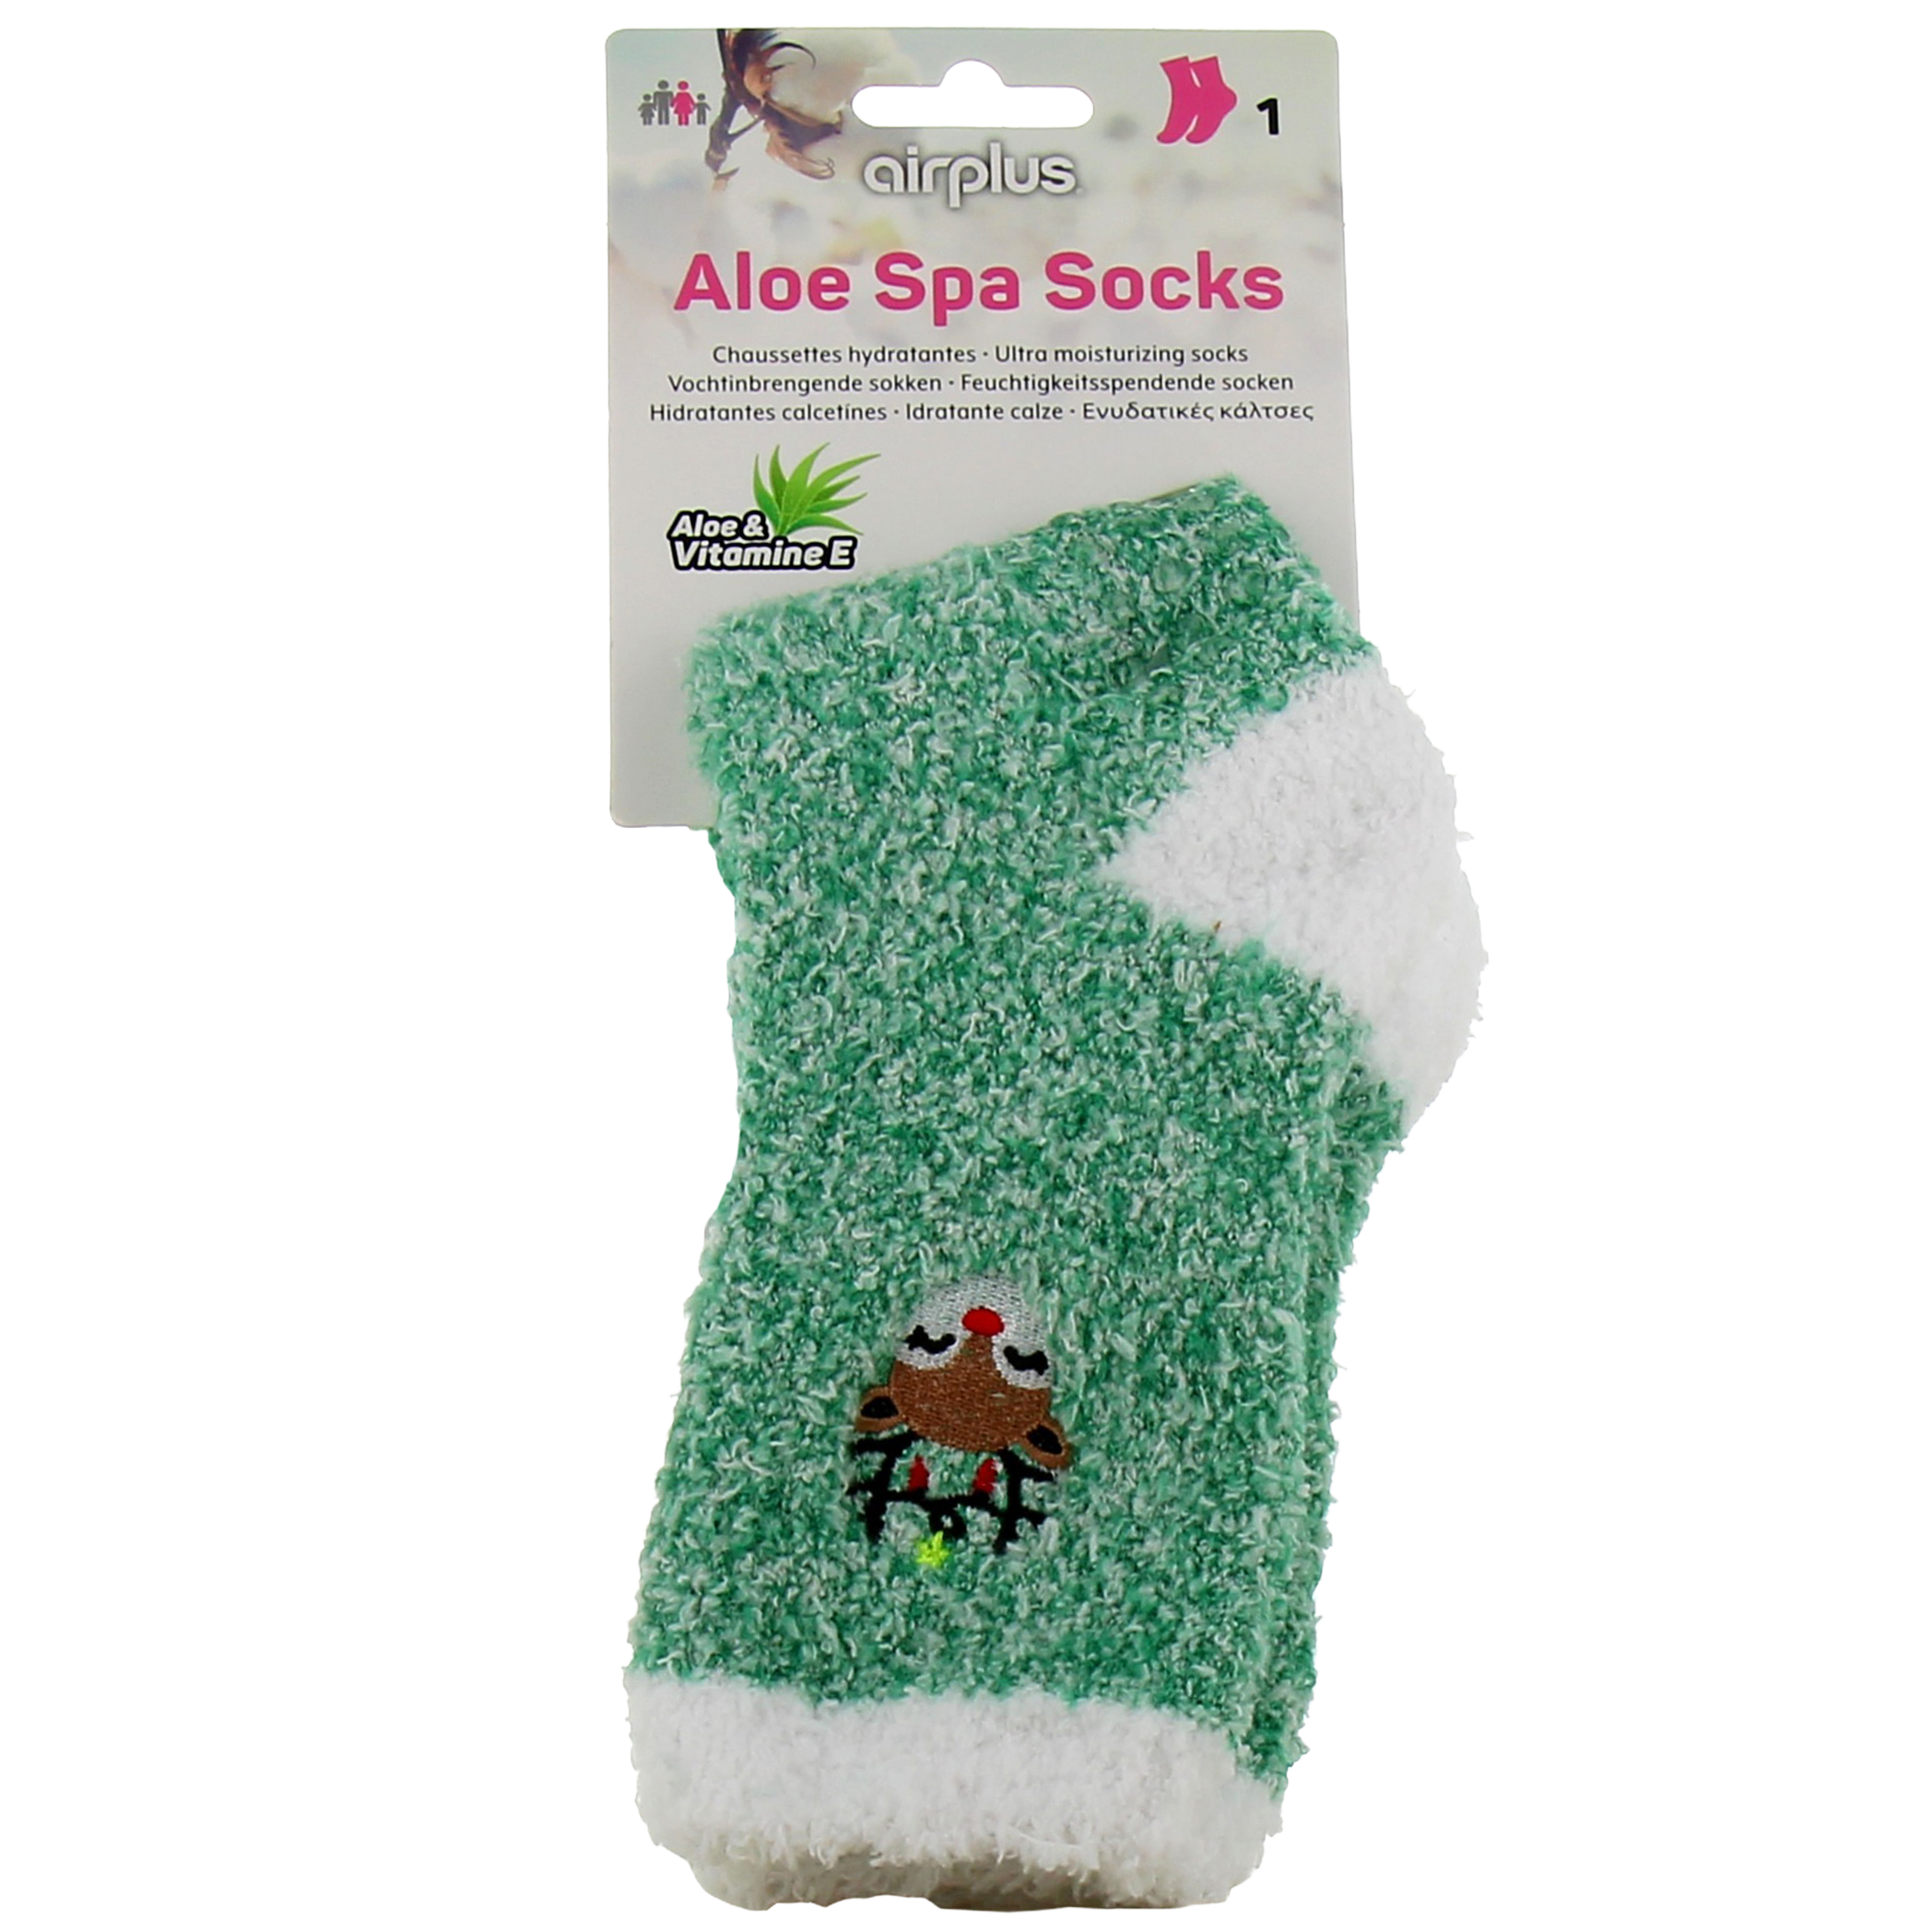 Airplus Aloe Spa chaussettes hydratantes - Soin des pieds